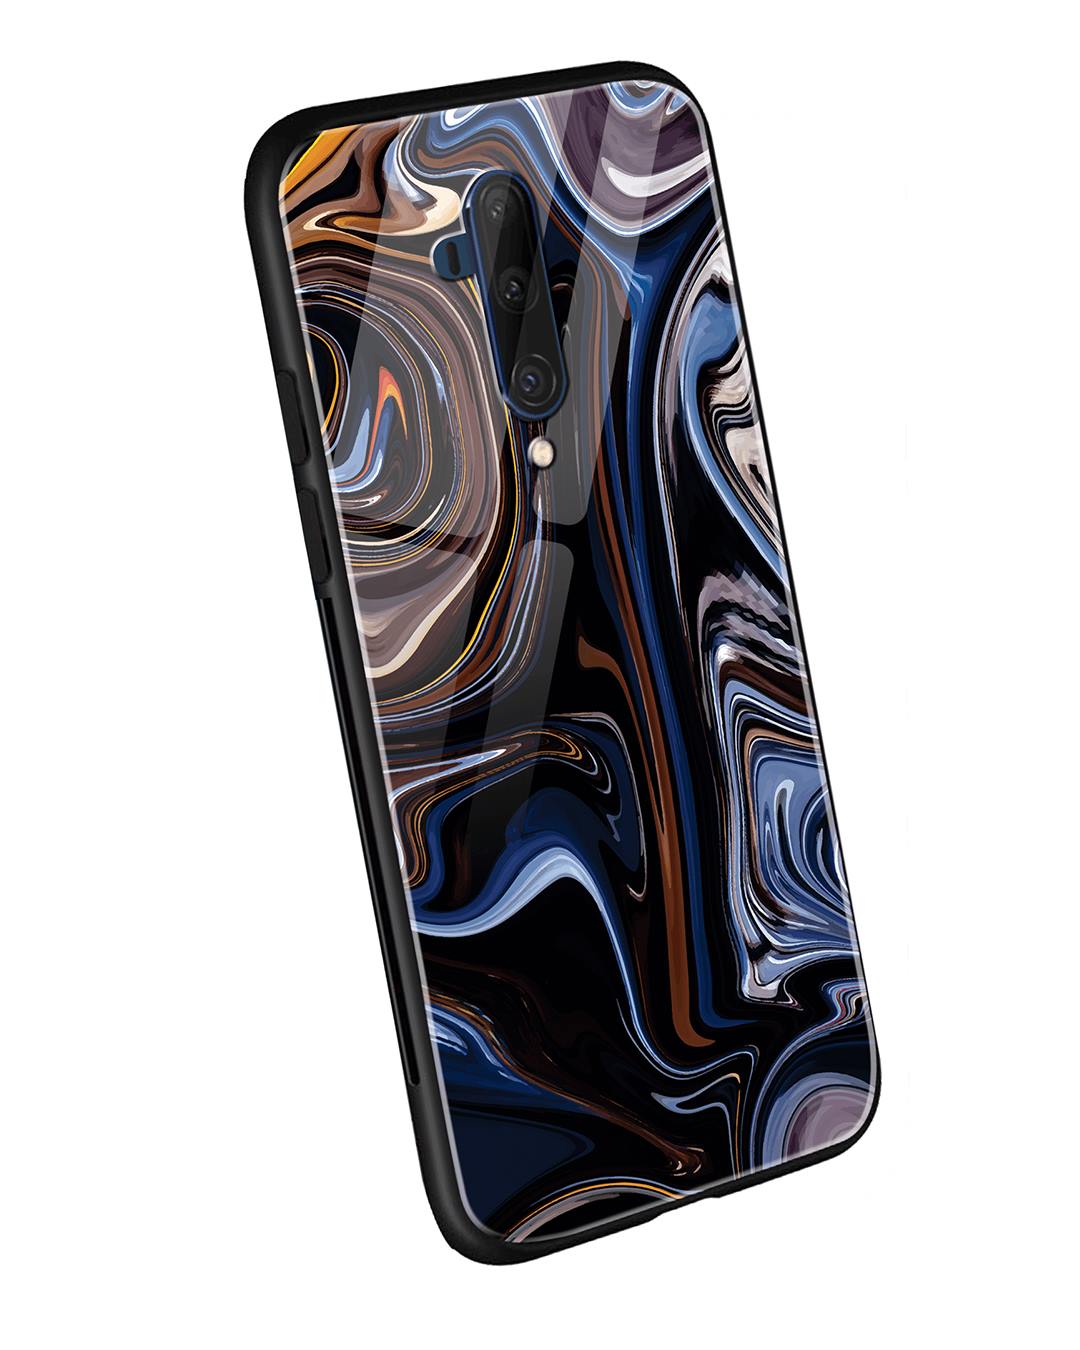 Shop Oil Paint Marable OnePlus 7T Pro Mobile Cover-Back